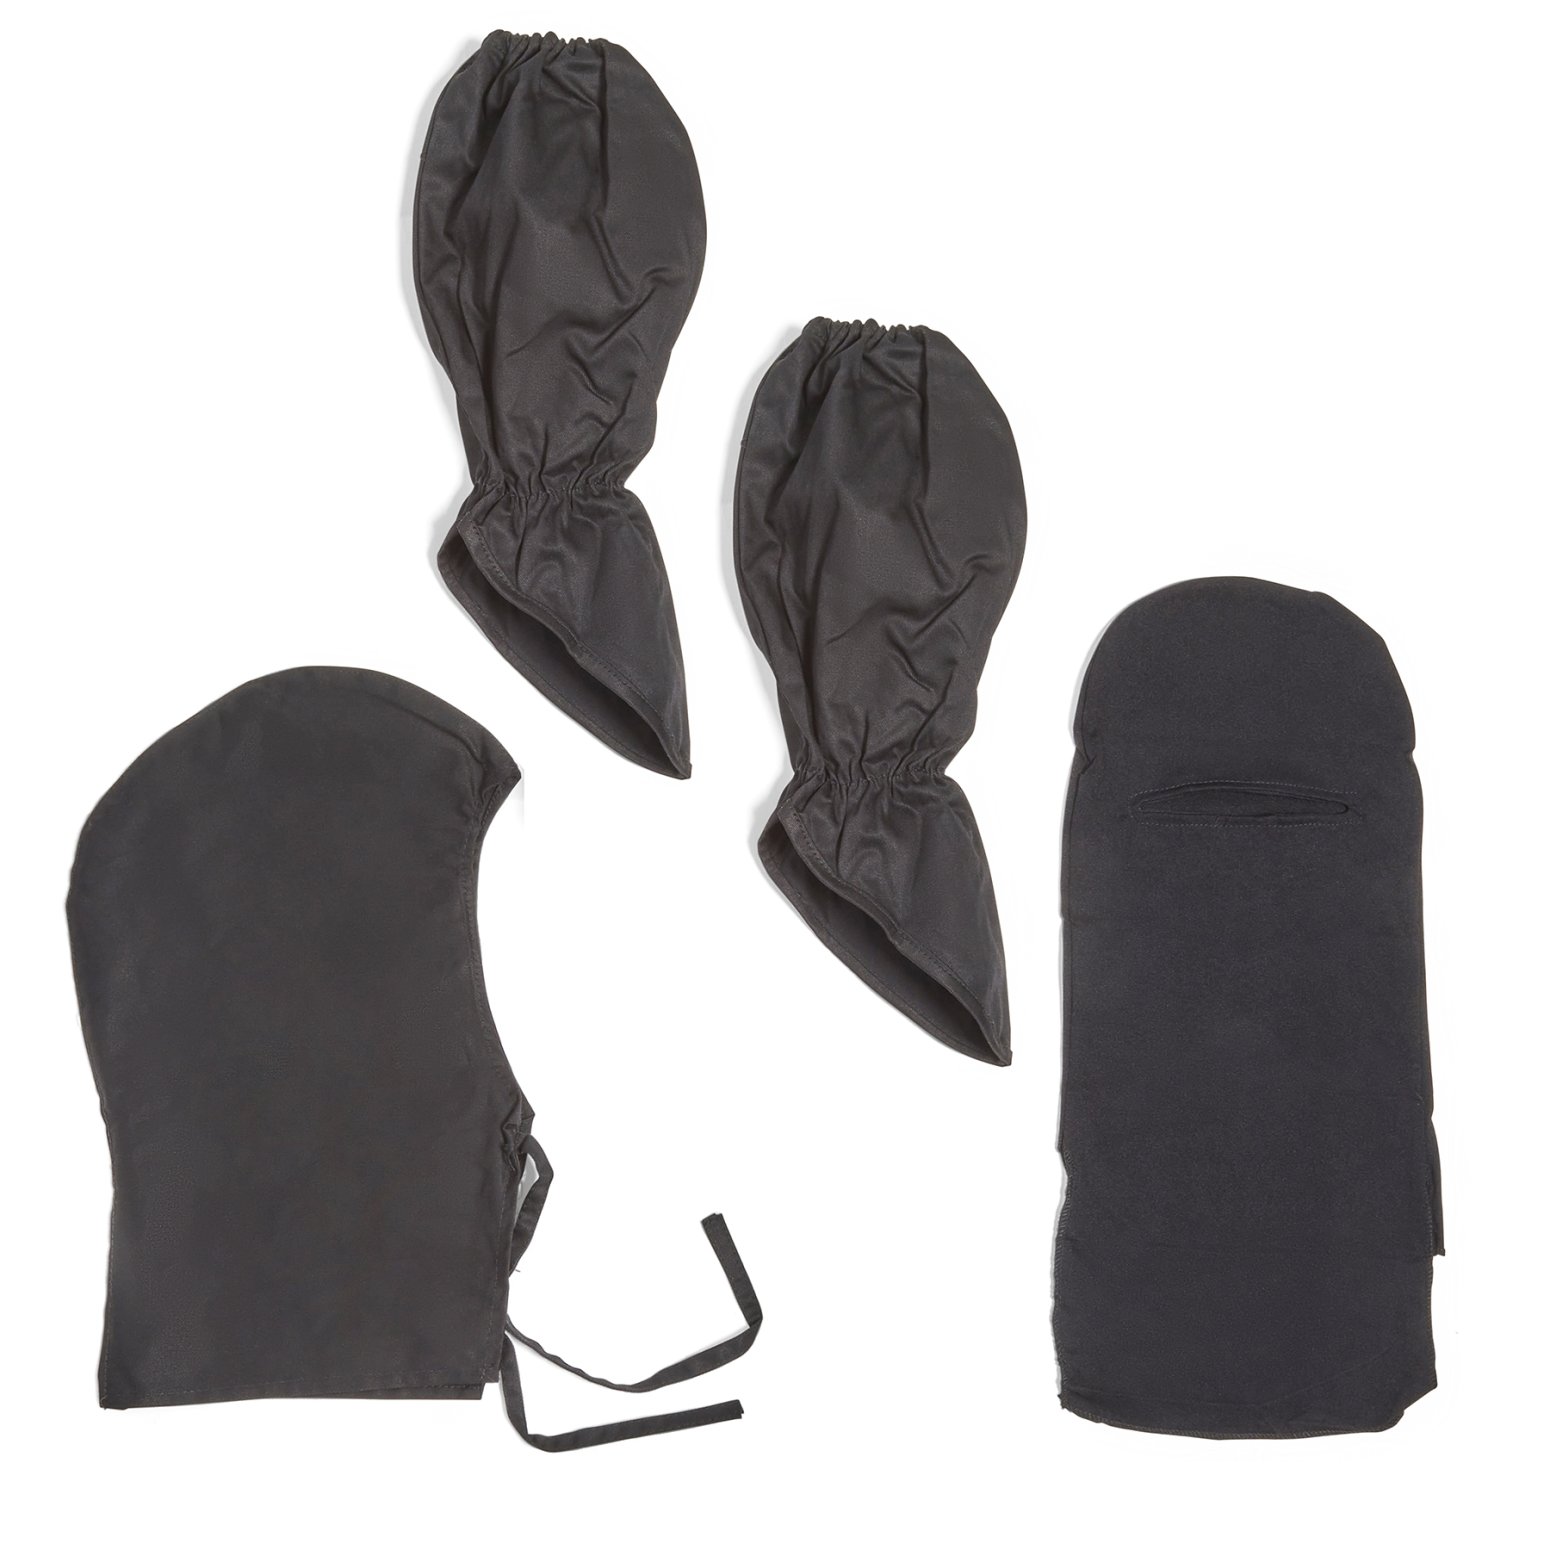 Ninja Gauntlets and Hood Set Pack - Black - Click Image to Close